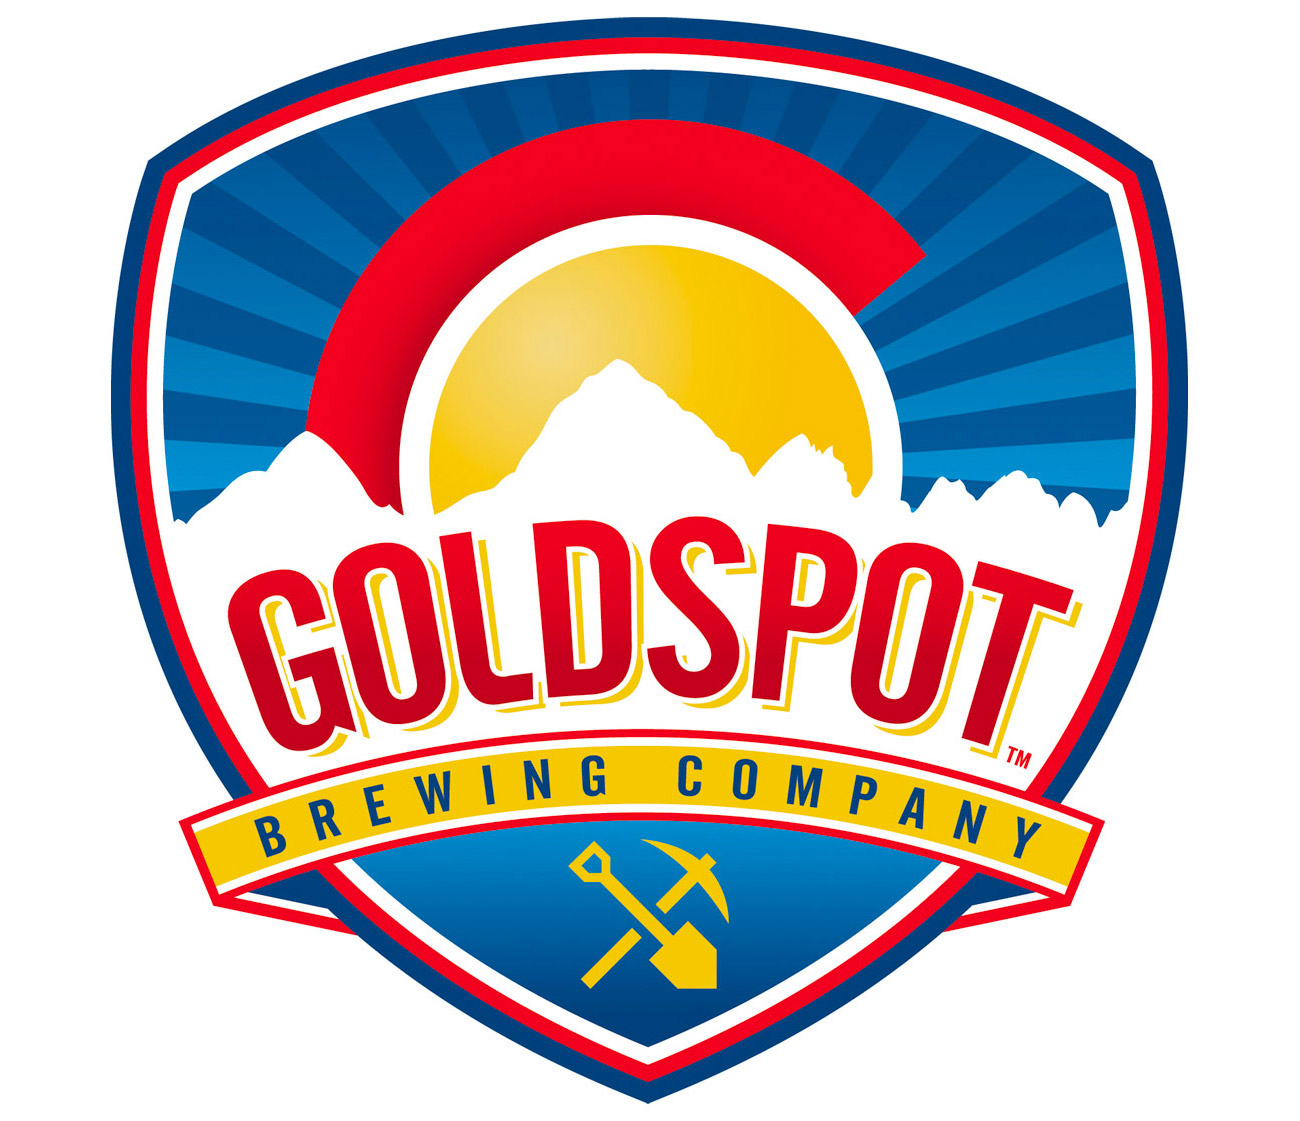 Goldspot Brewing Company Branding